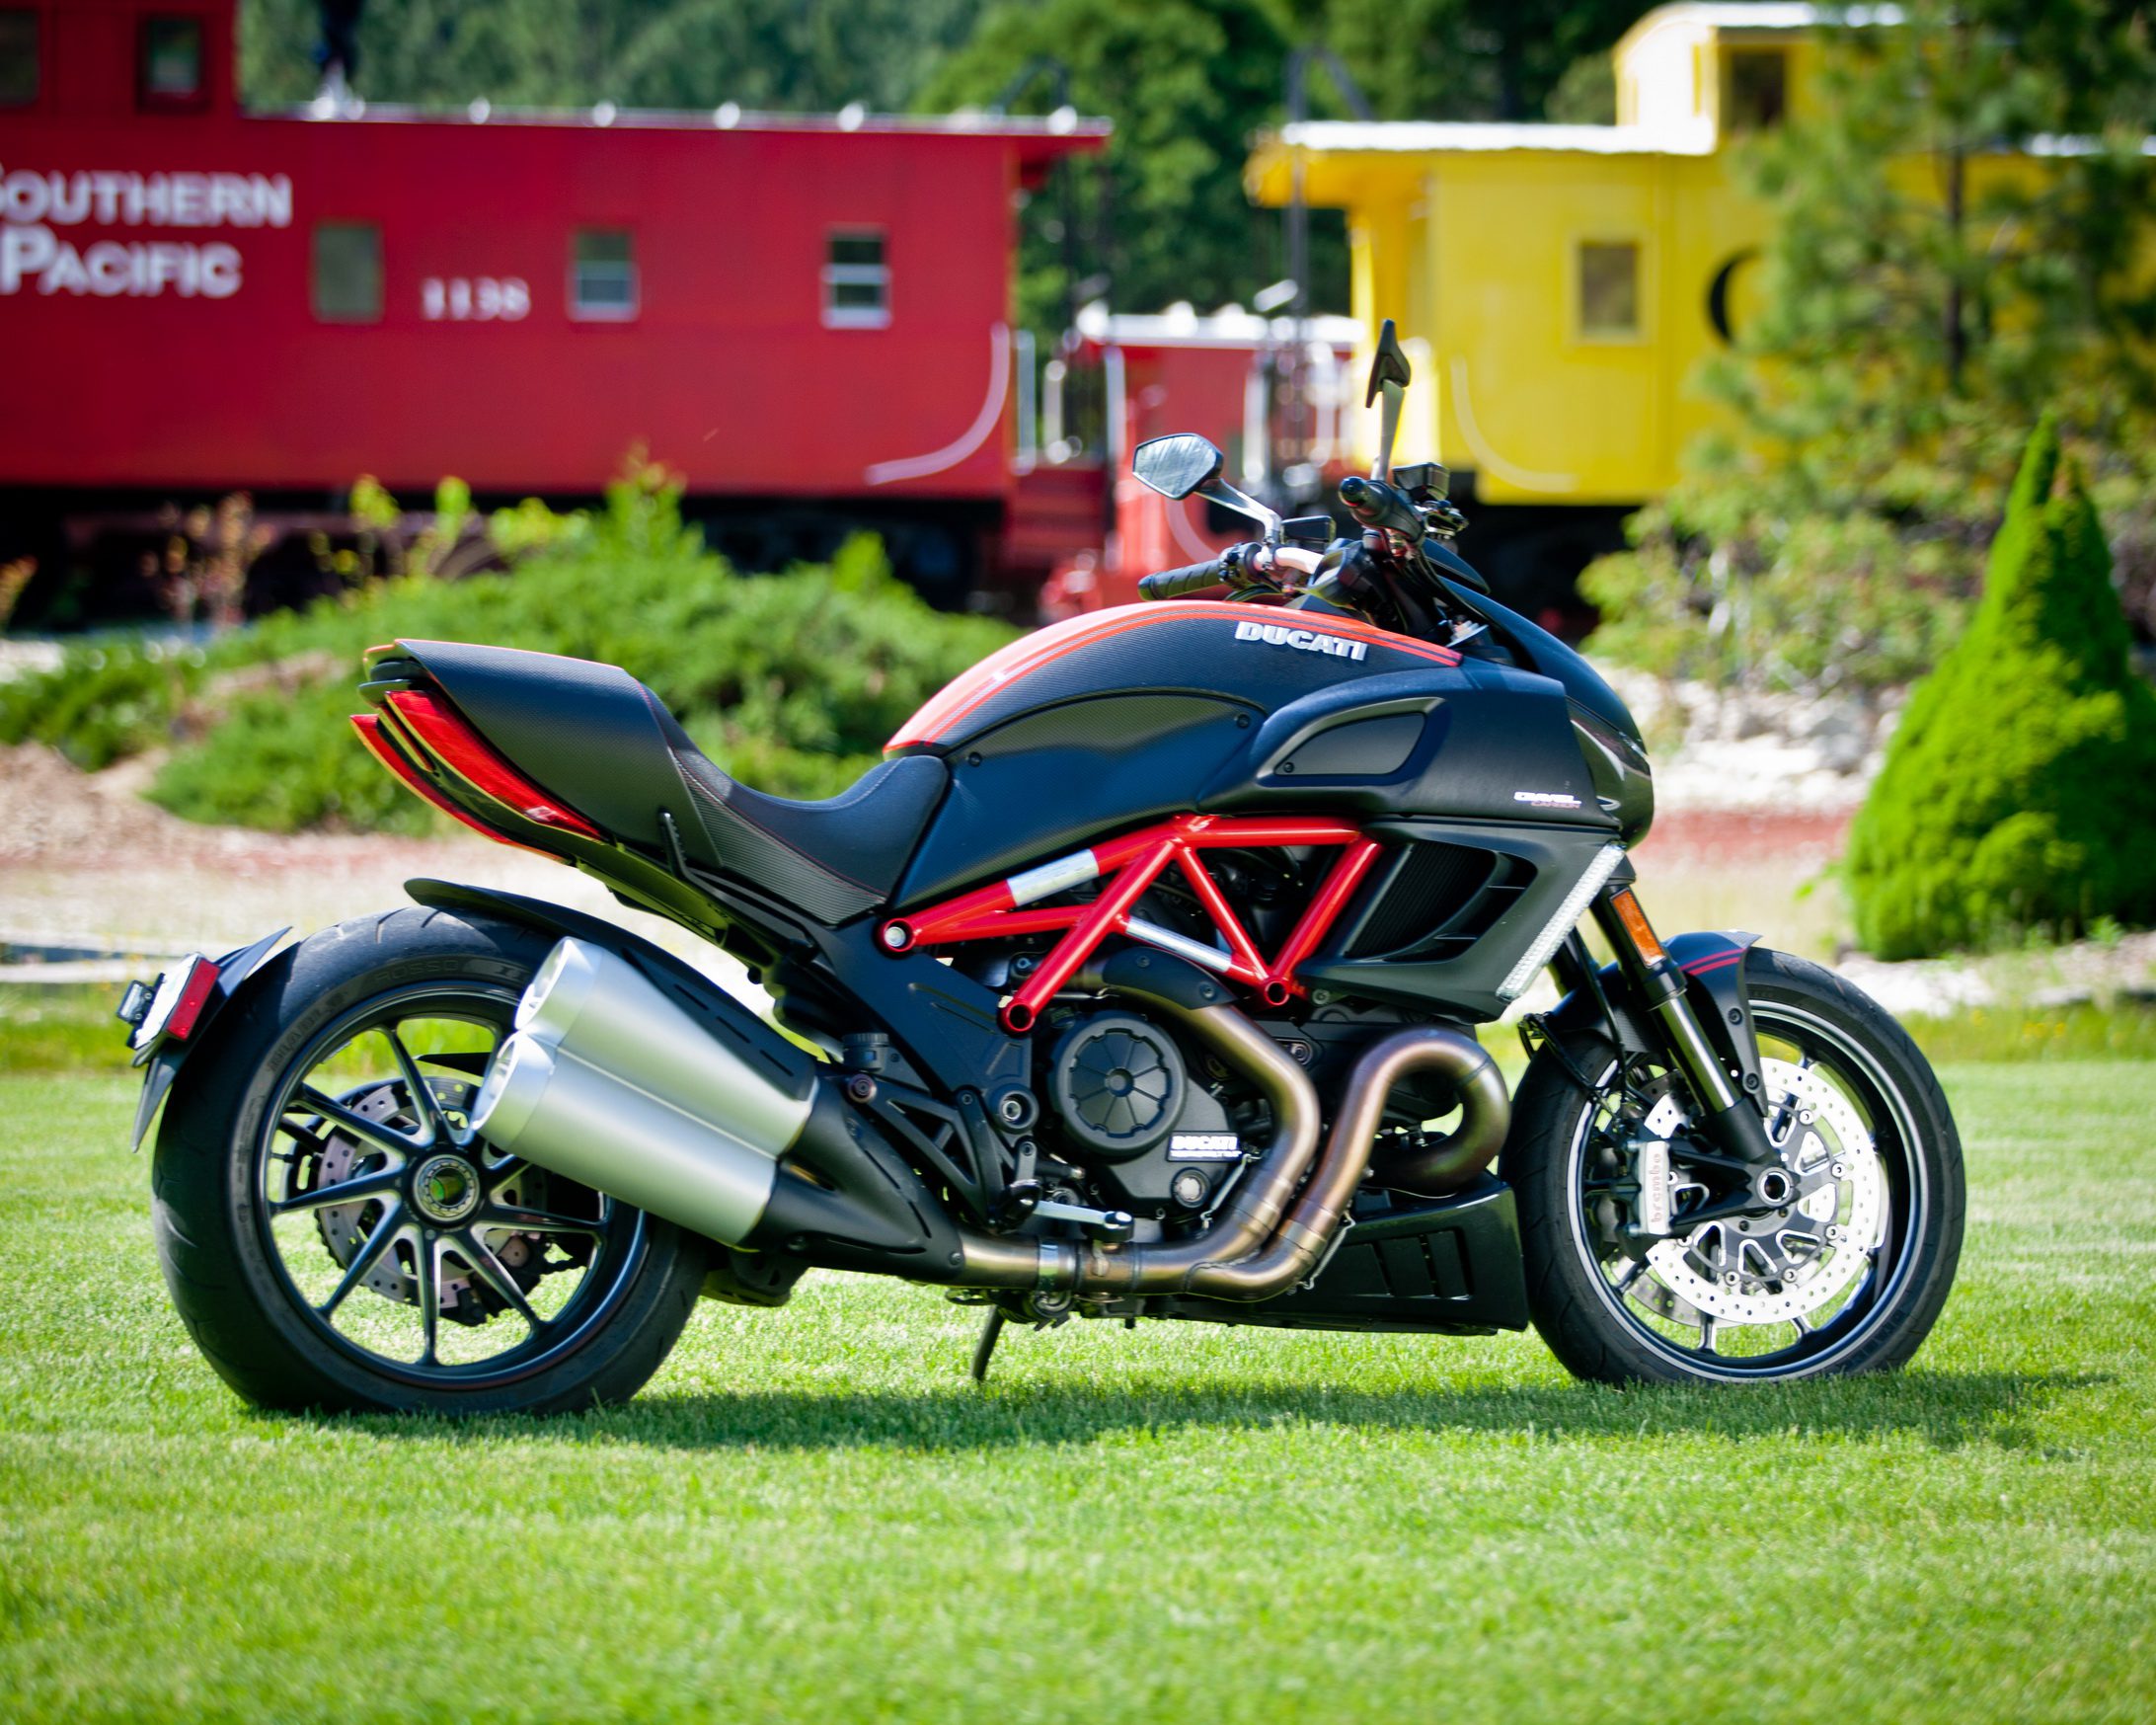 Ducati Diavel | Motorcycle USA-2982 | Dunsmuir Railroad Depot Museum